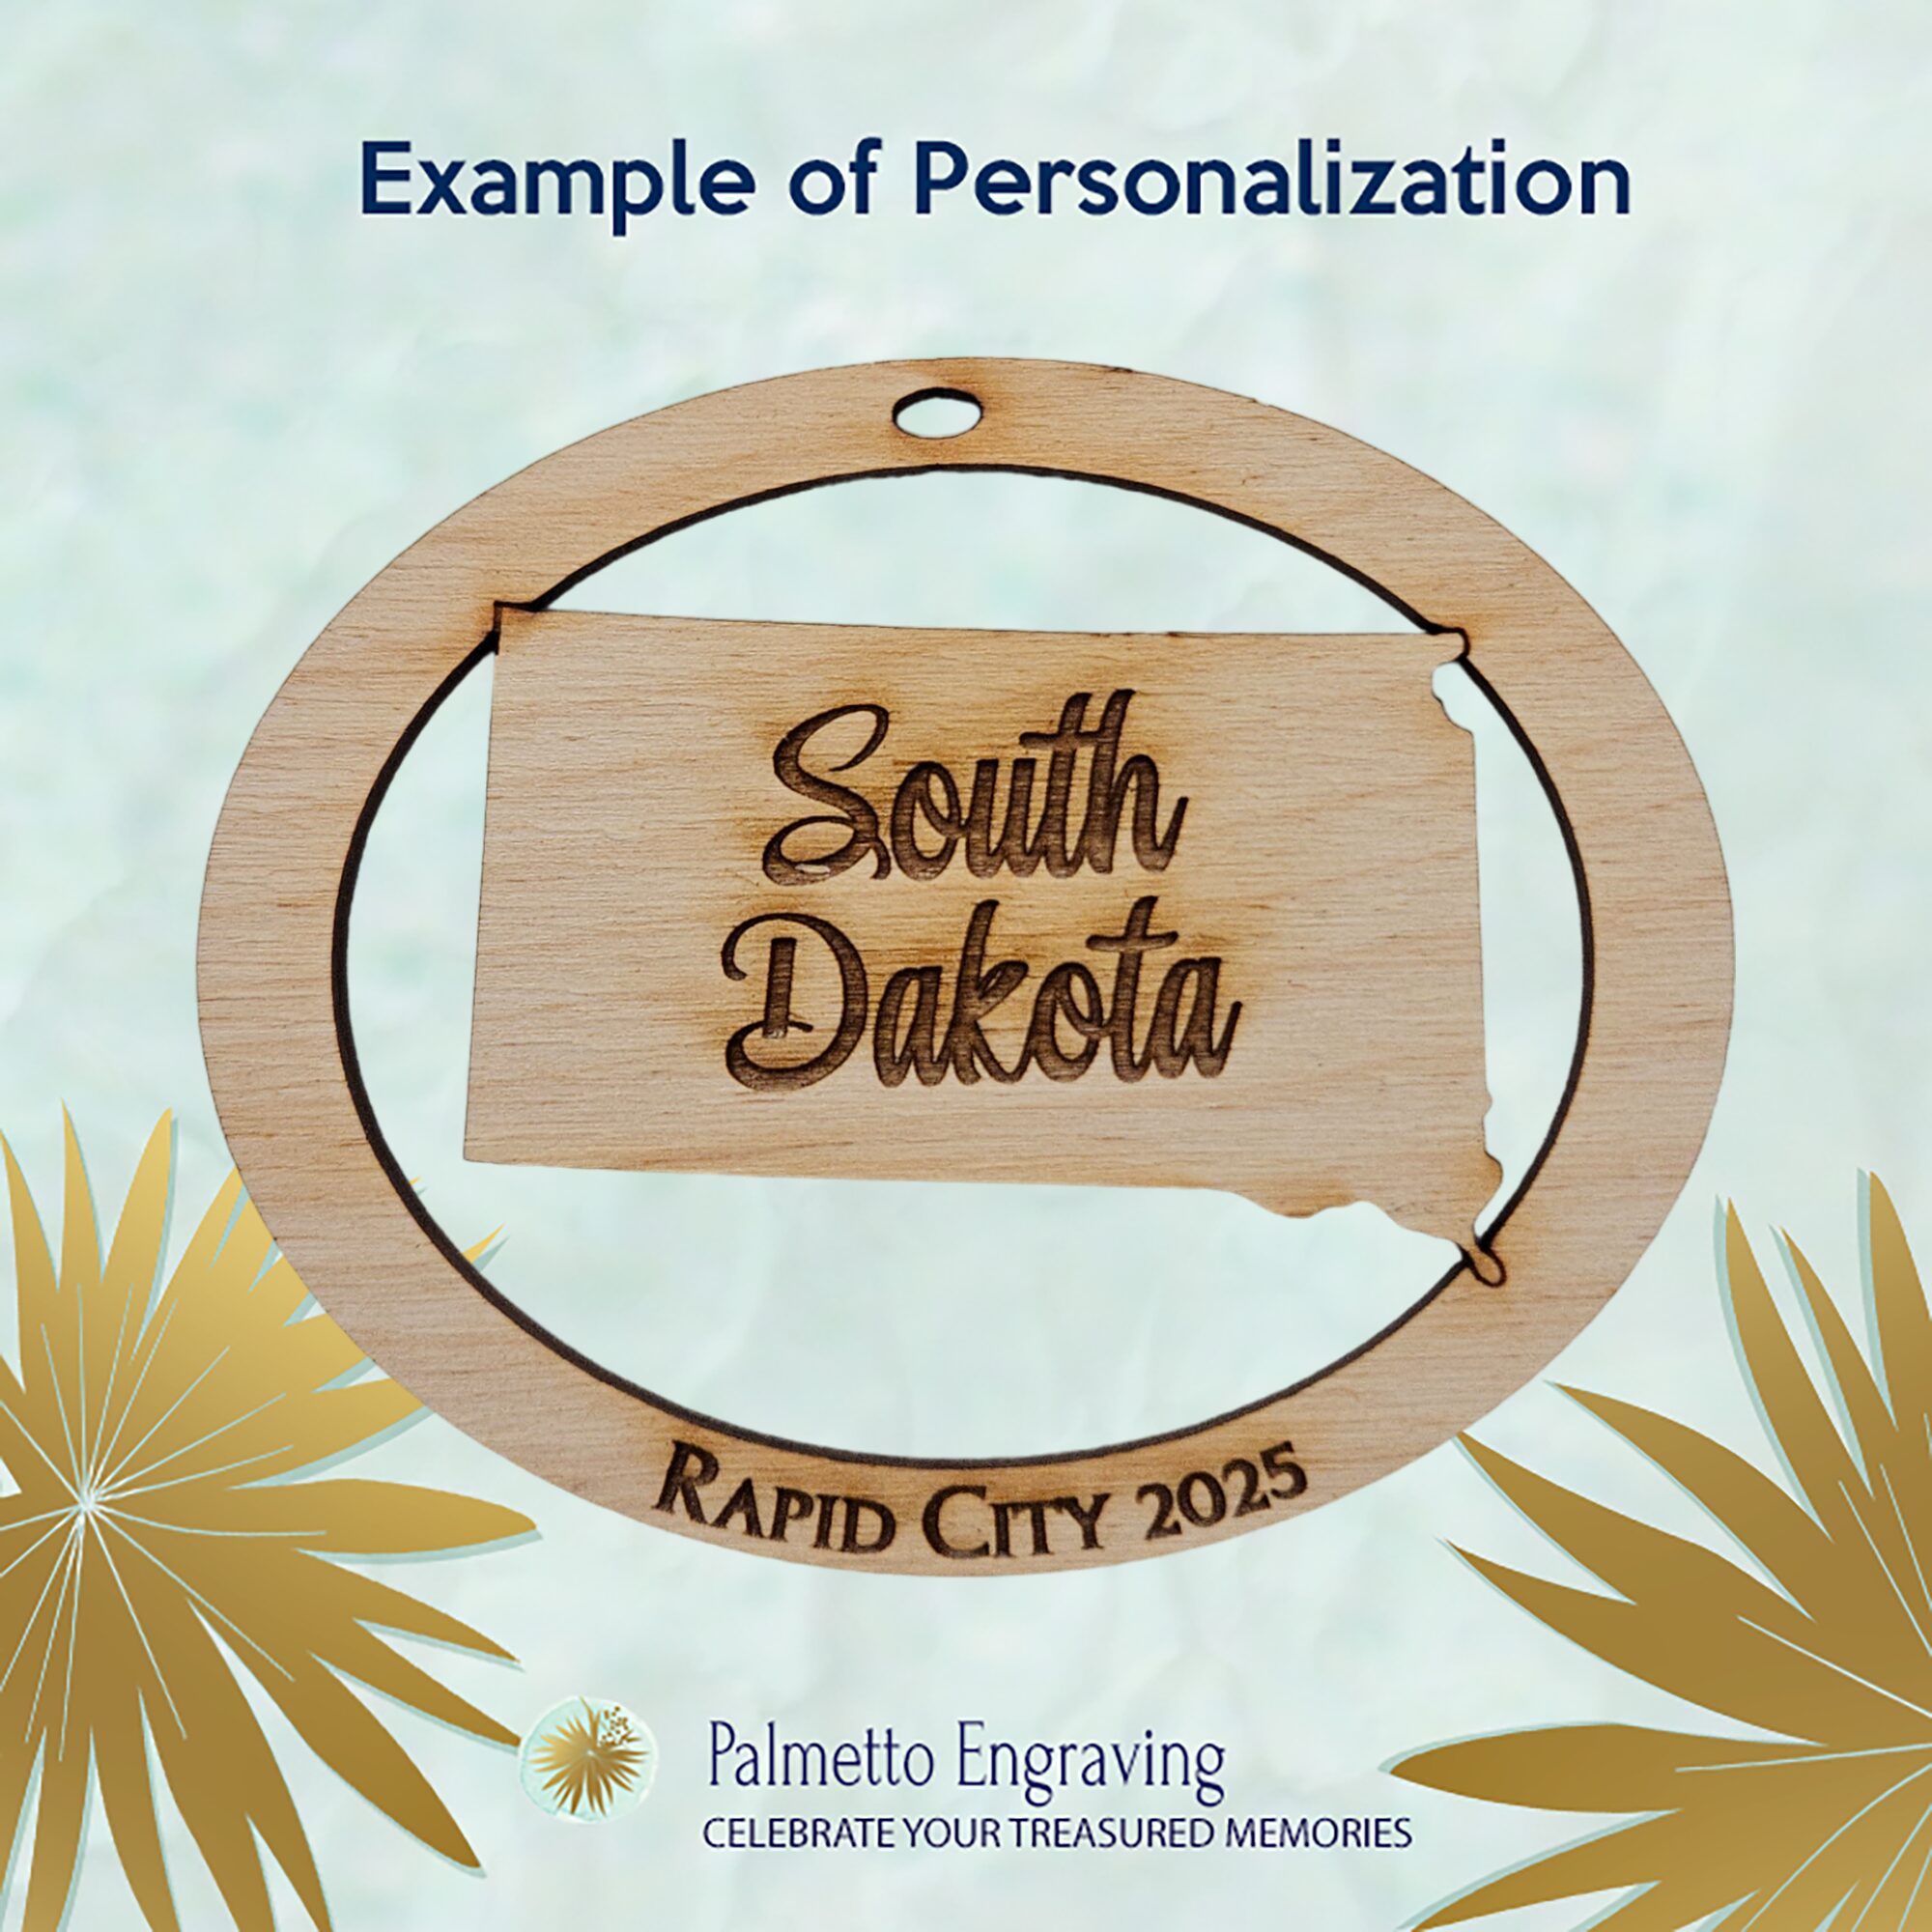 South Dakota Gifts and Souvenirs